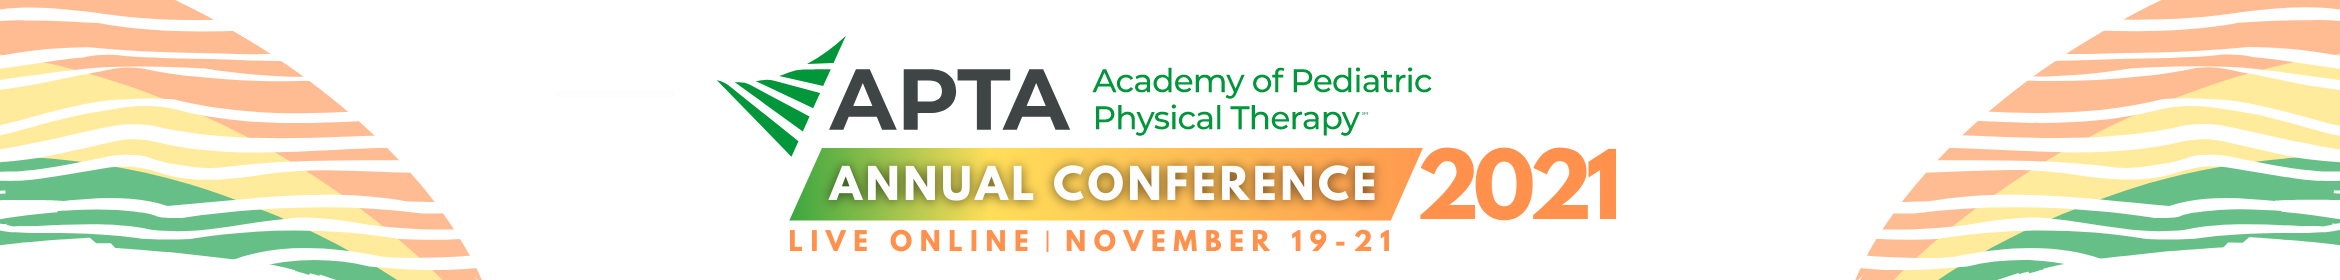 2021 APTA Pediatrics Annual Conference Main banner